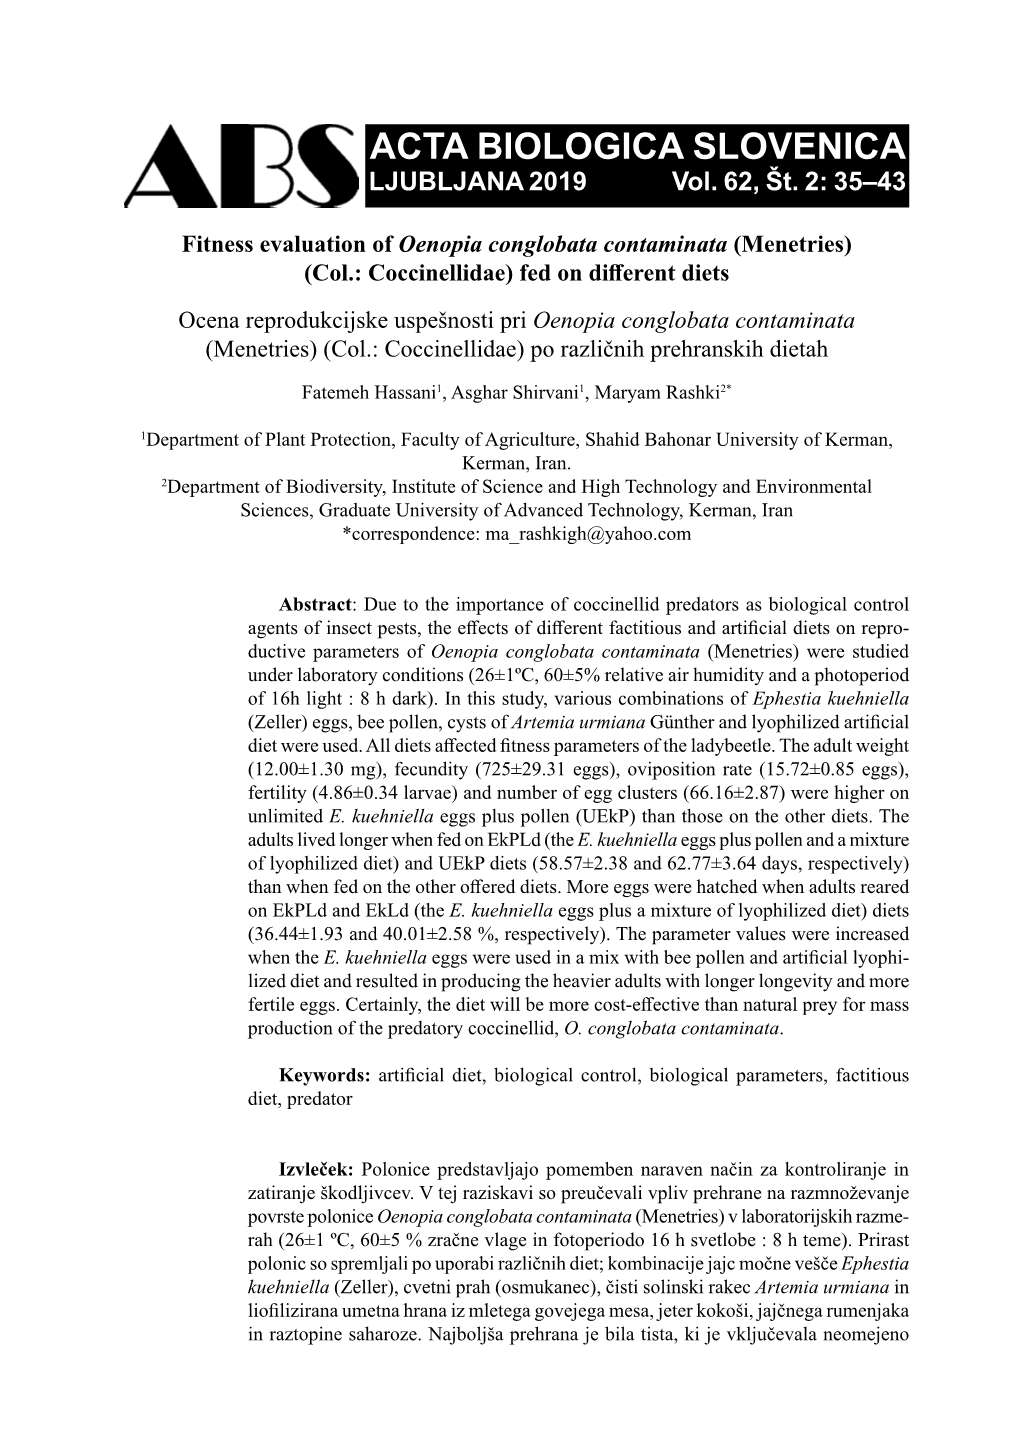 Fitness Evaluation of Oenopia Conglobata Contaminata